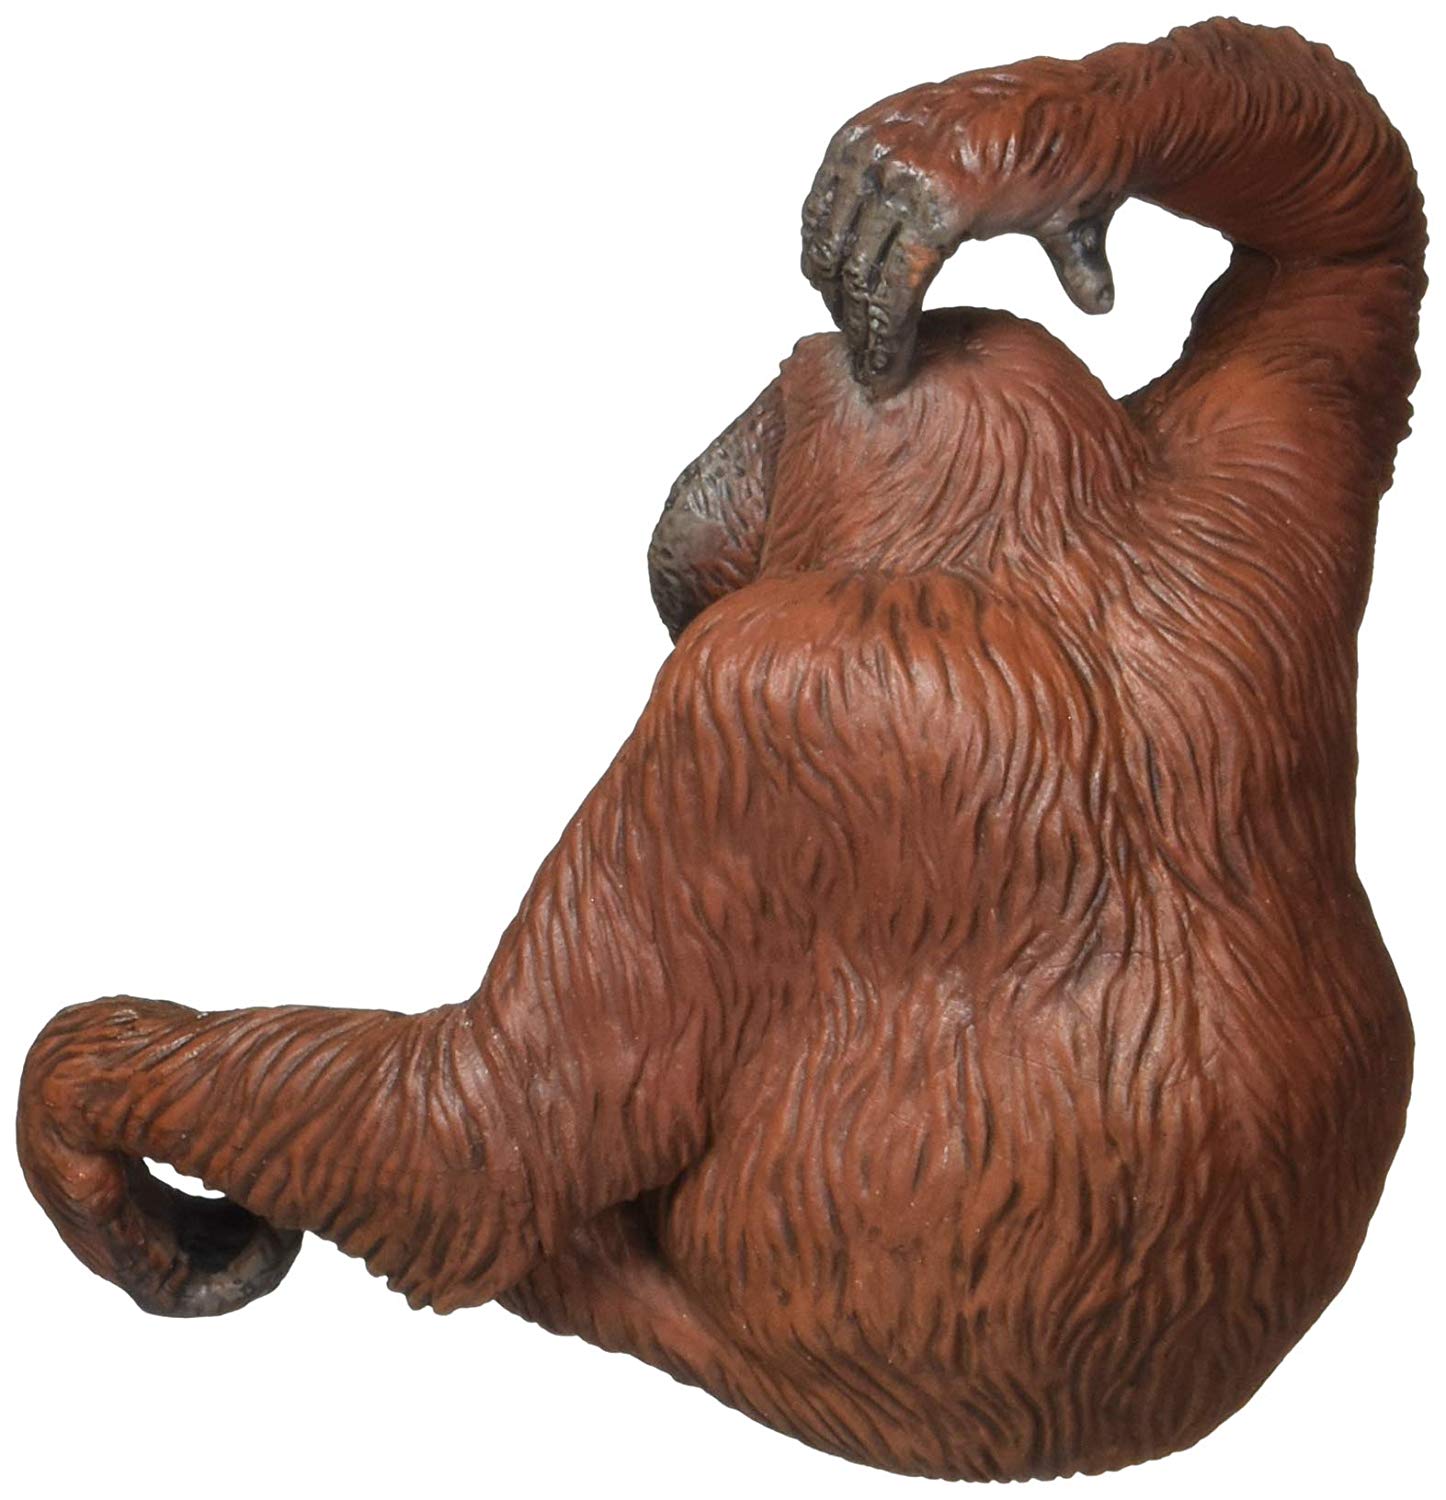 Papo 50120 Collectable Model Toy Orangutan Wild Animal Figure